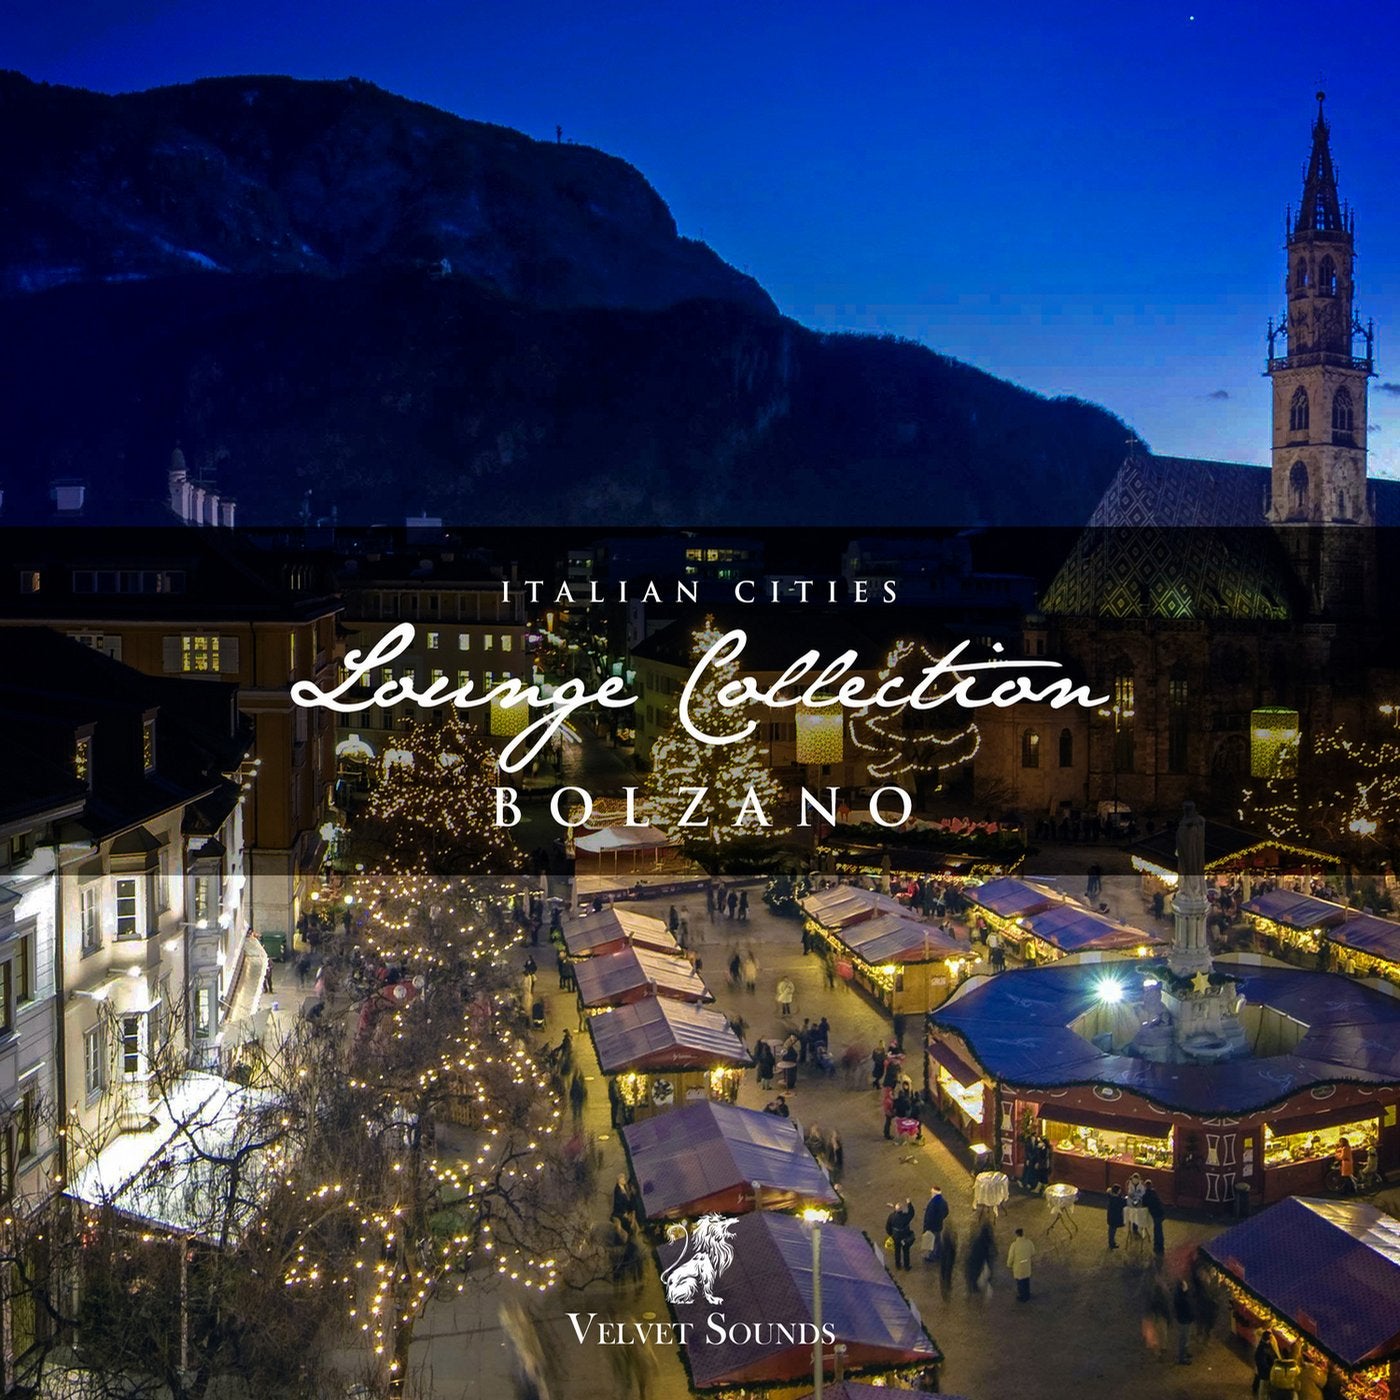 Italian Cities Lounge Collection Vol. 9 - Bolzano